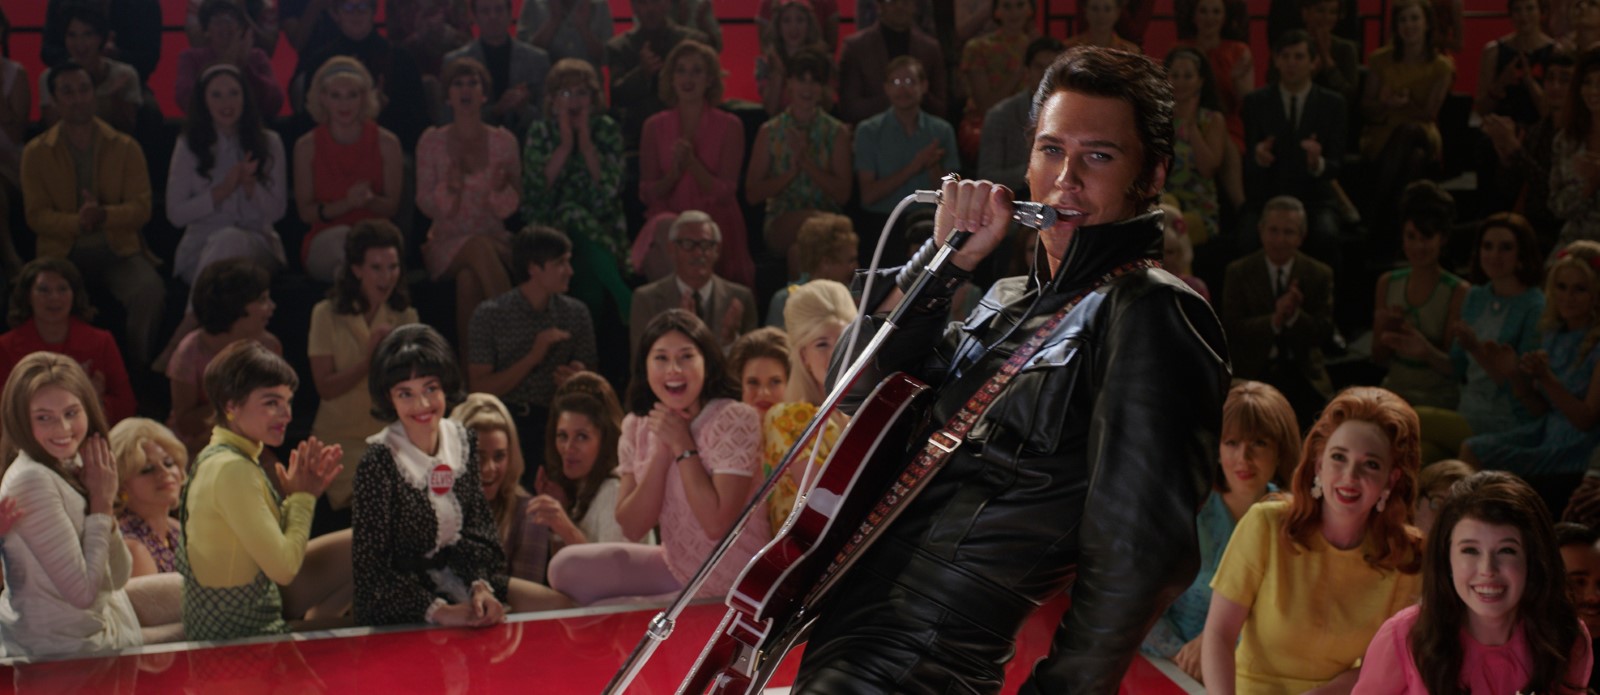 Szenenbild 1 vom Film Elvis